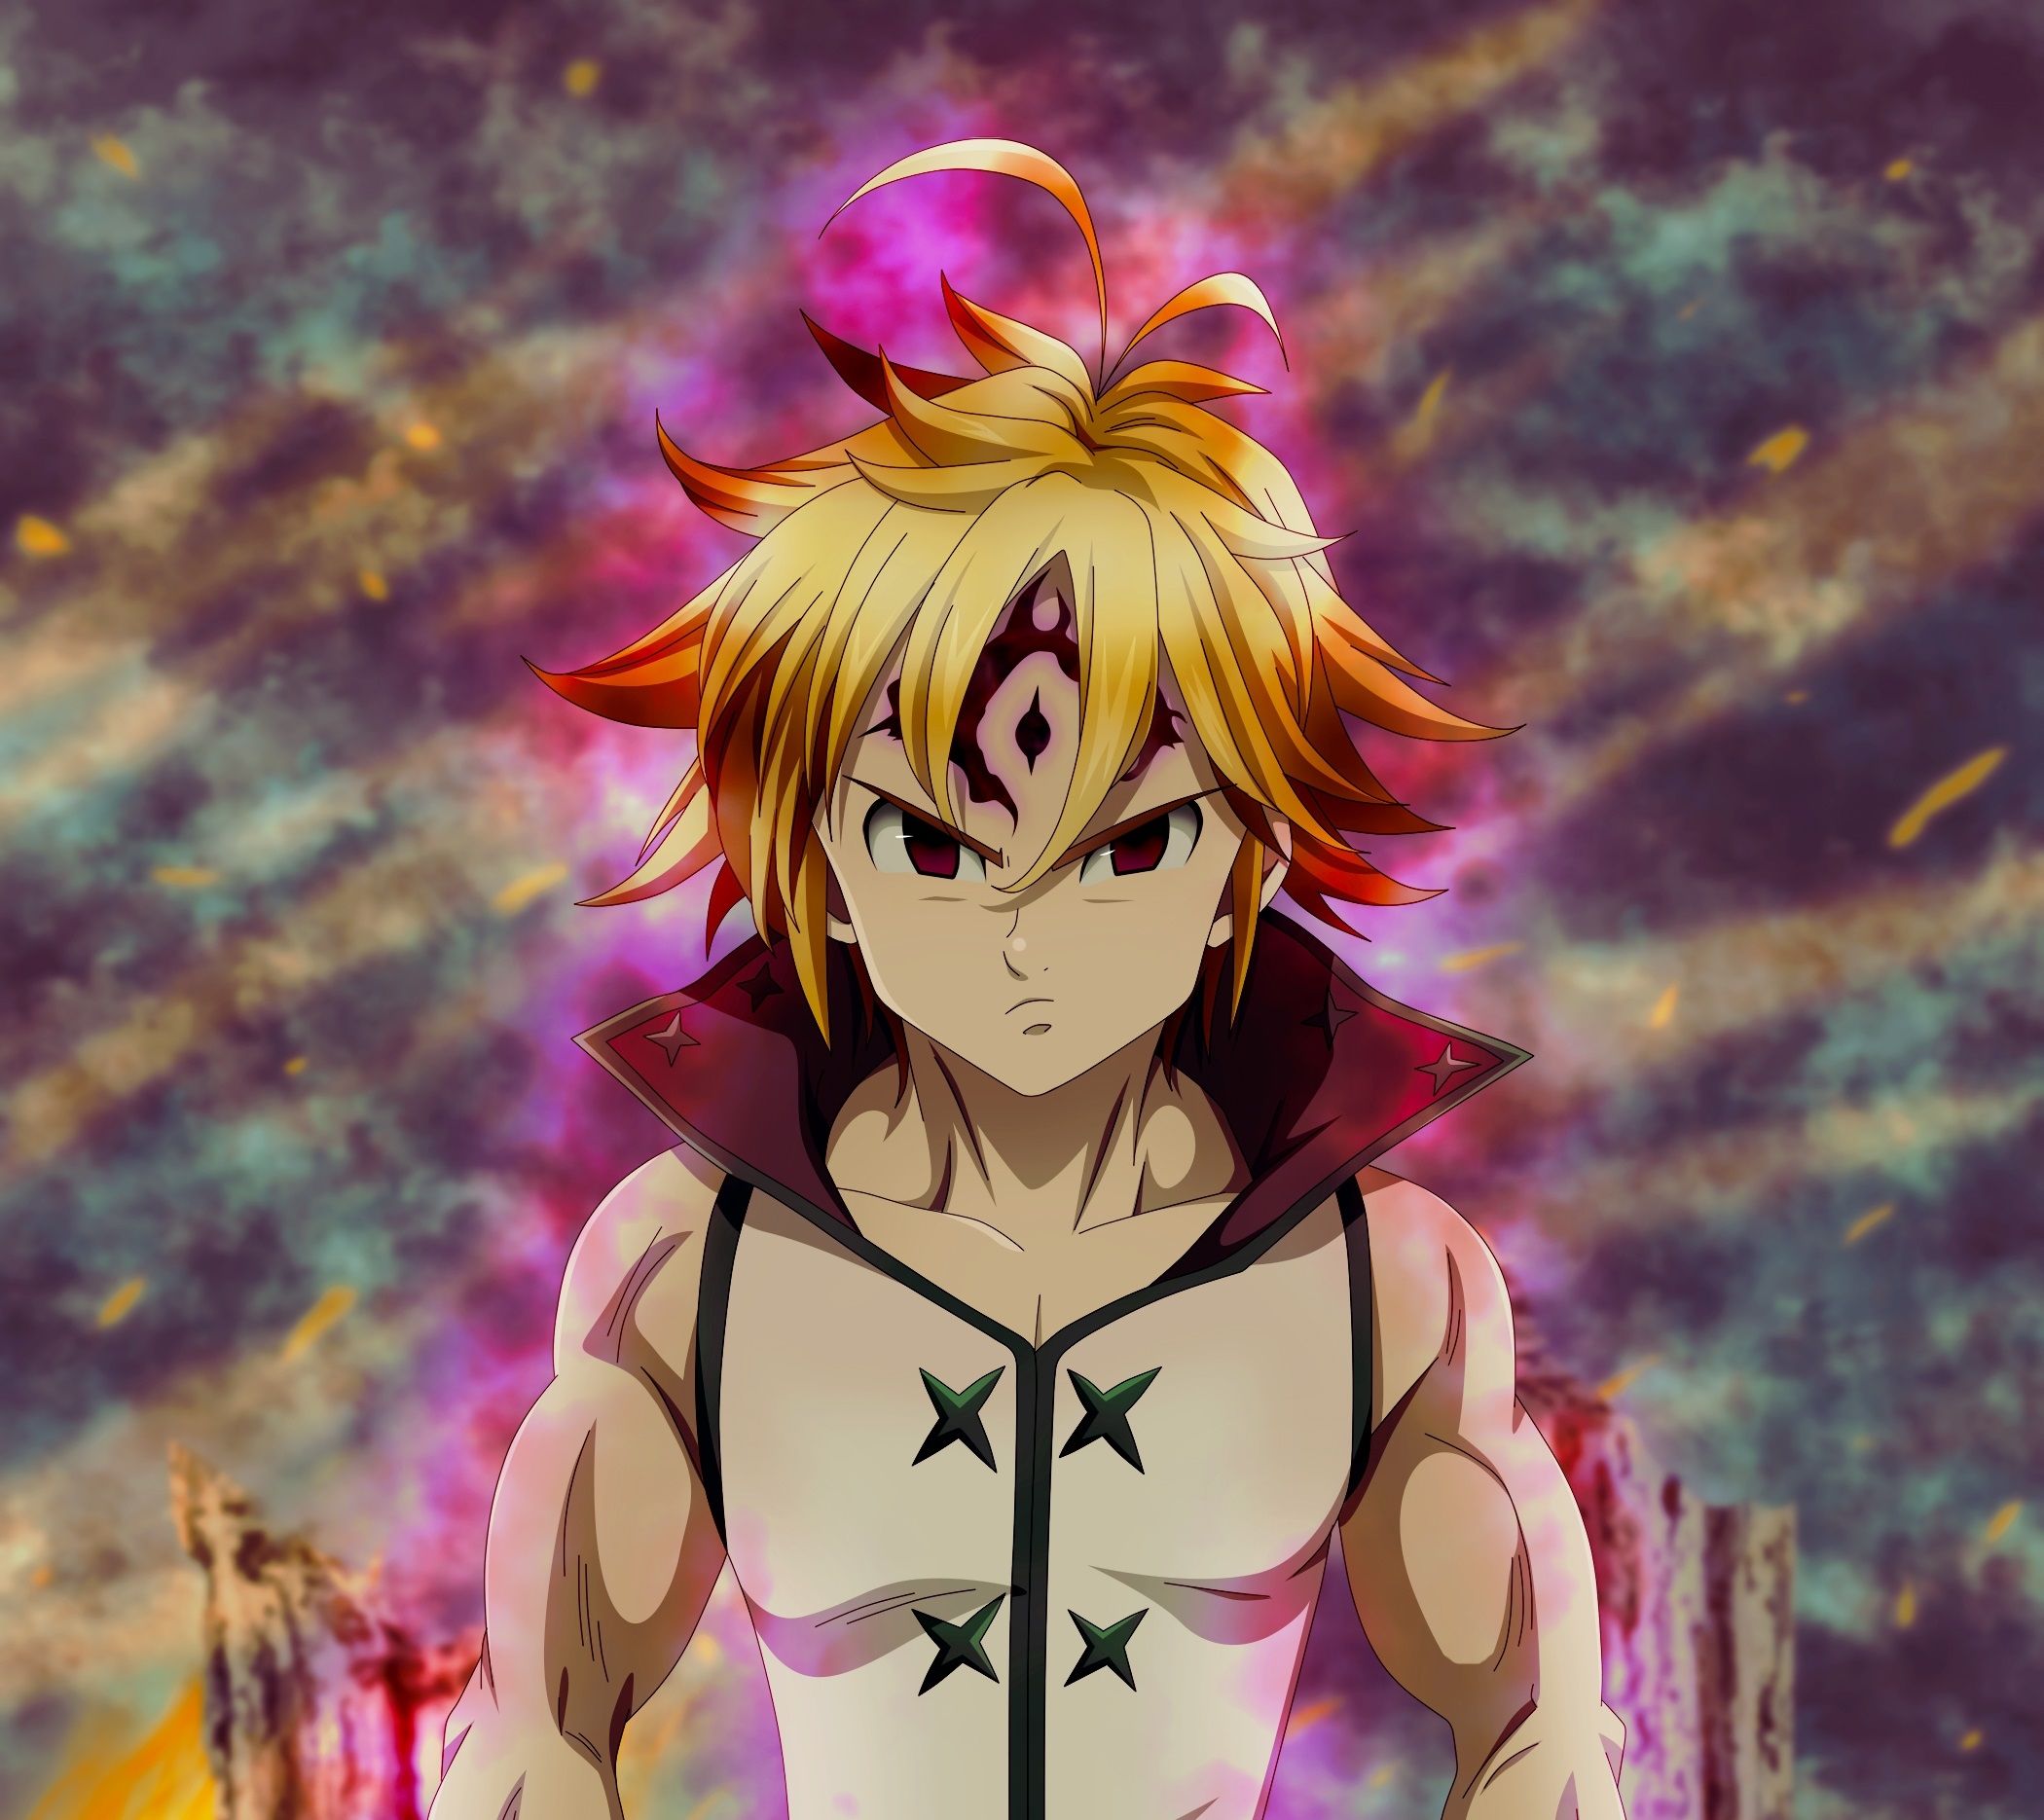 Meliodas Seven Deadly Sins Warrior 1600x900 Resolution Wallpaper, HD Anime 4K Wallpaper, Image, Photo and Background